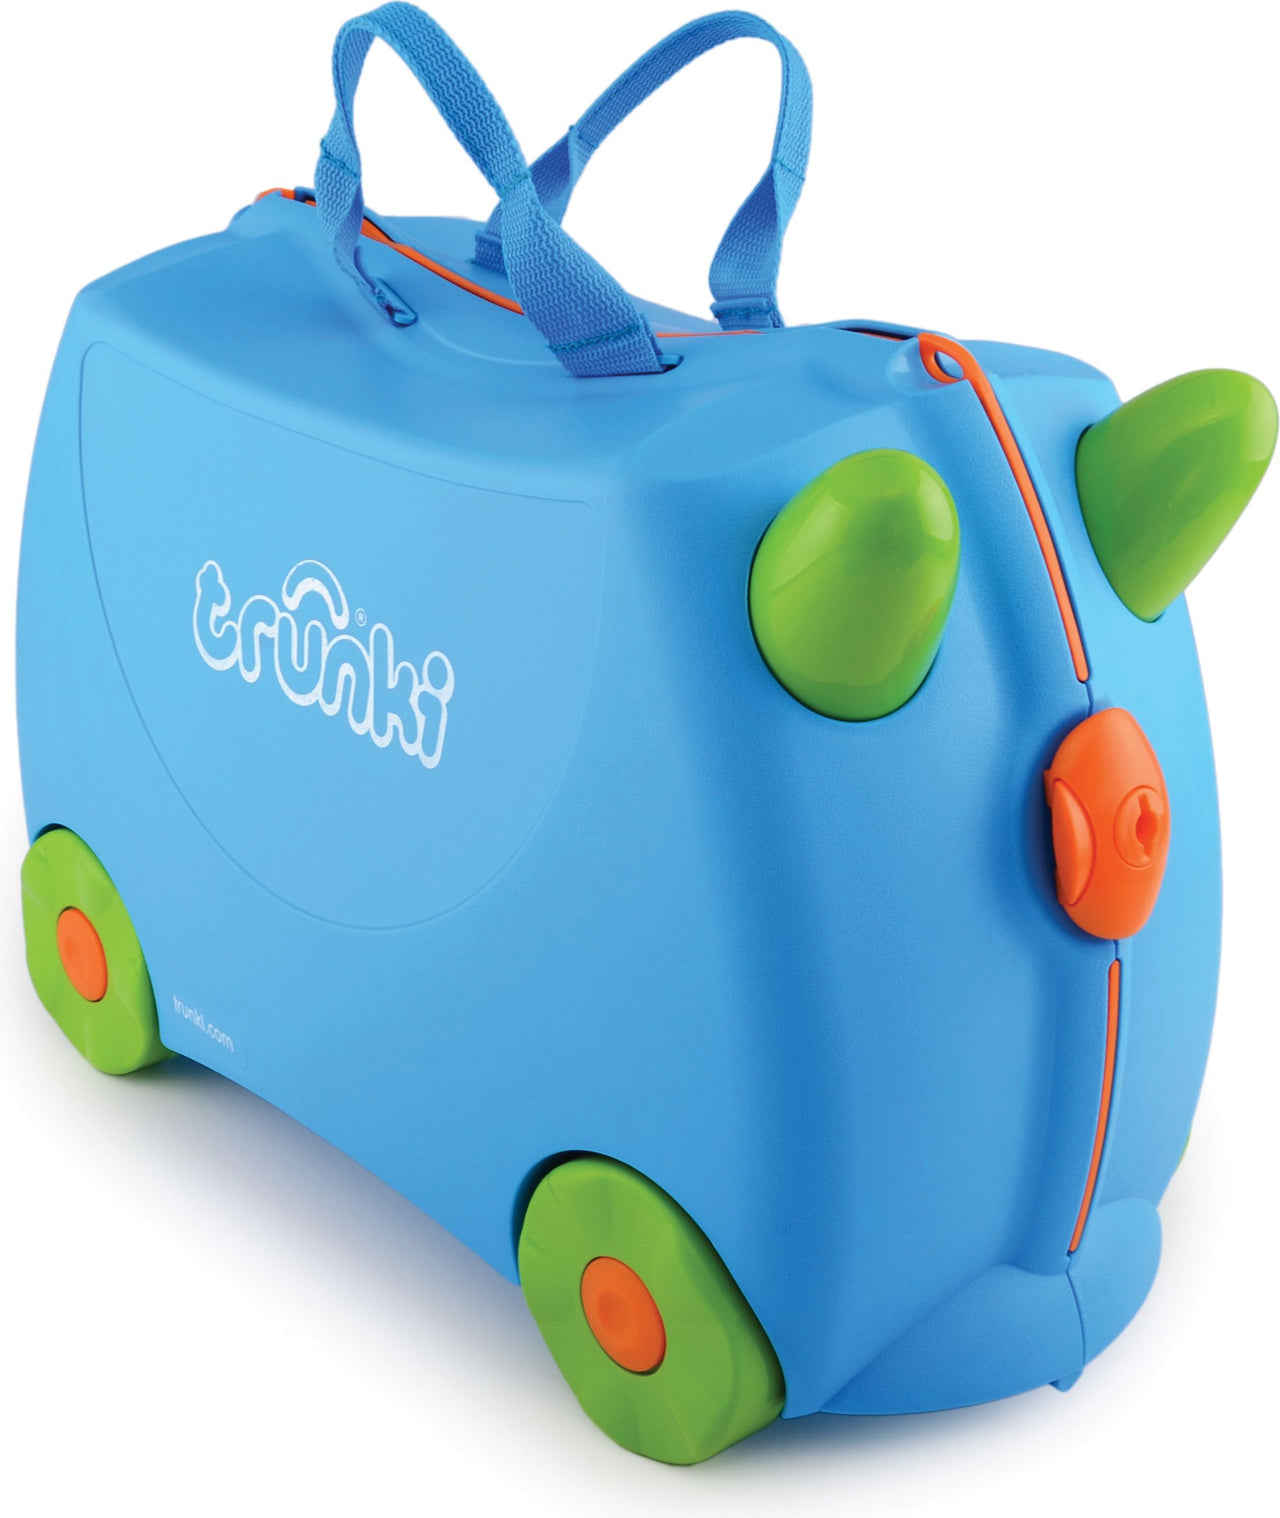 Ride-on kids suitcase - Terrance Blue